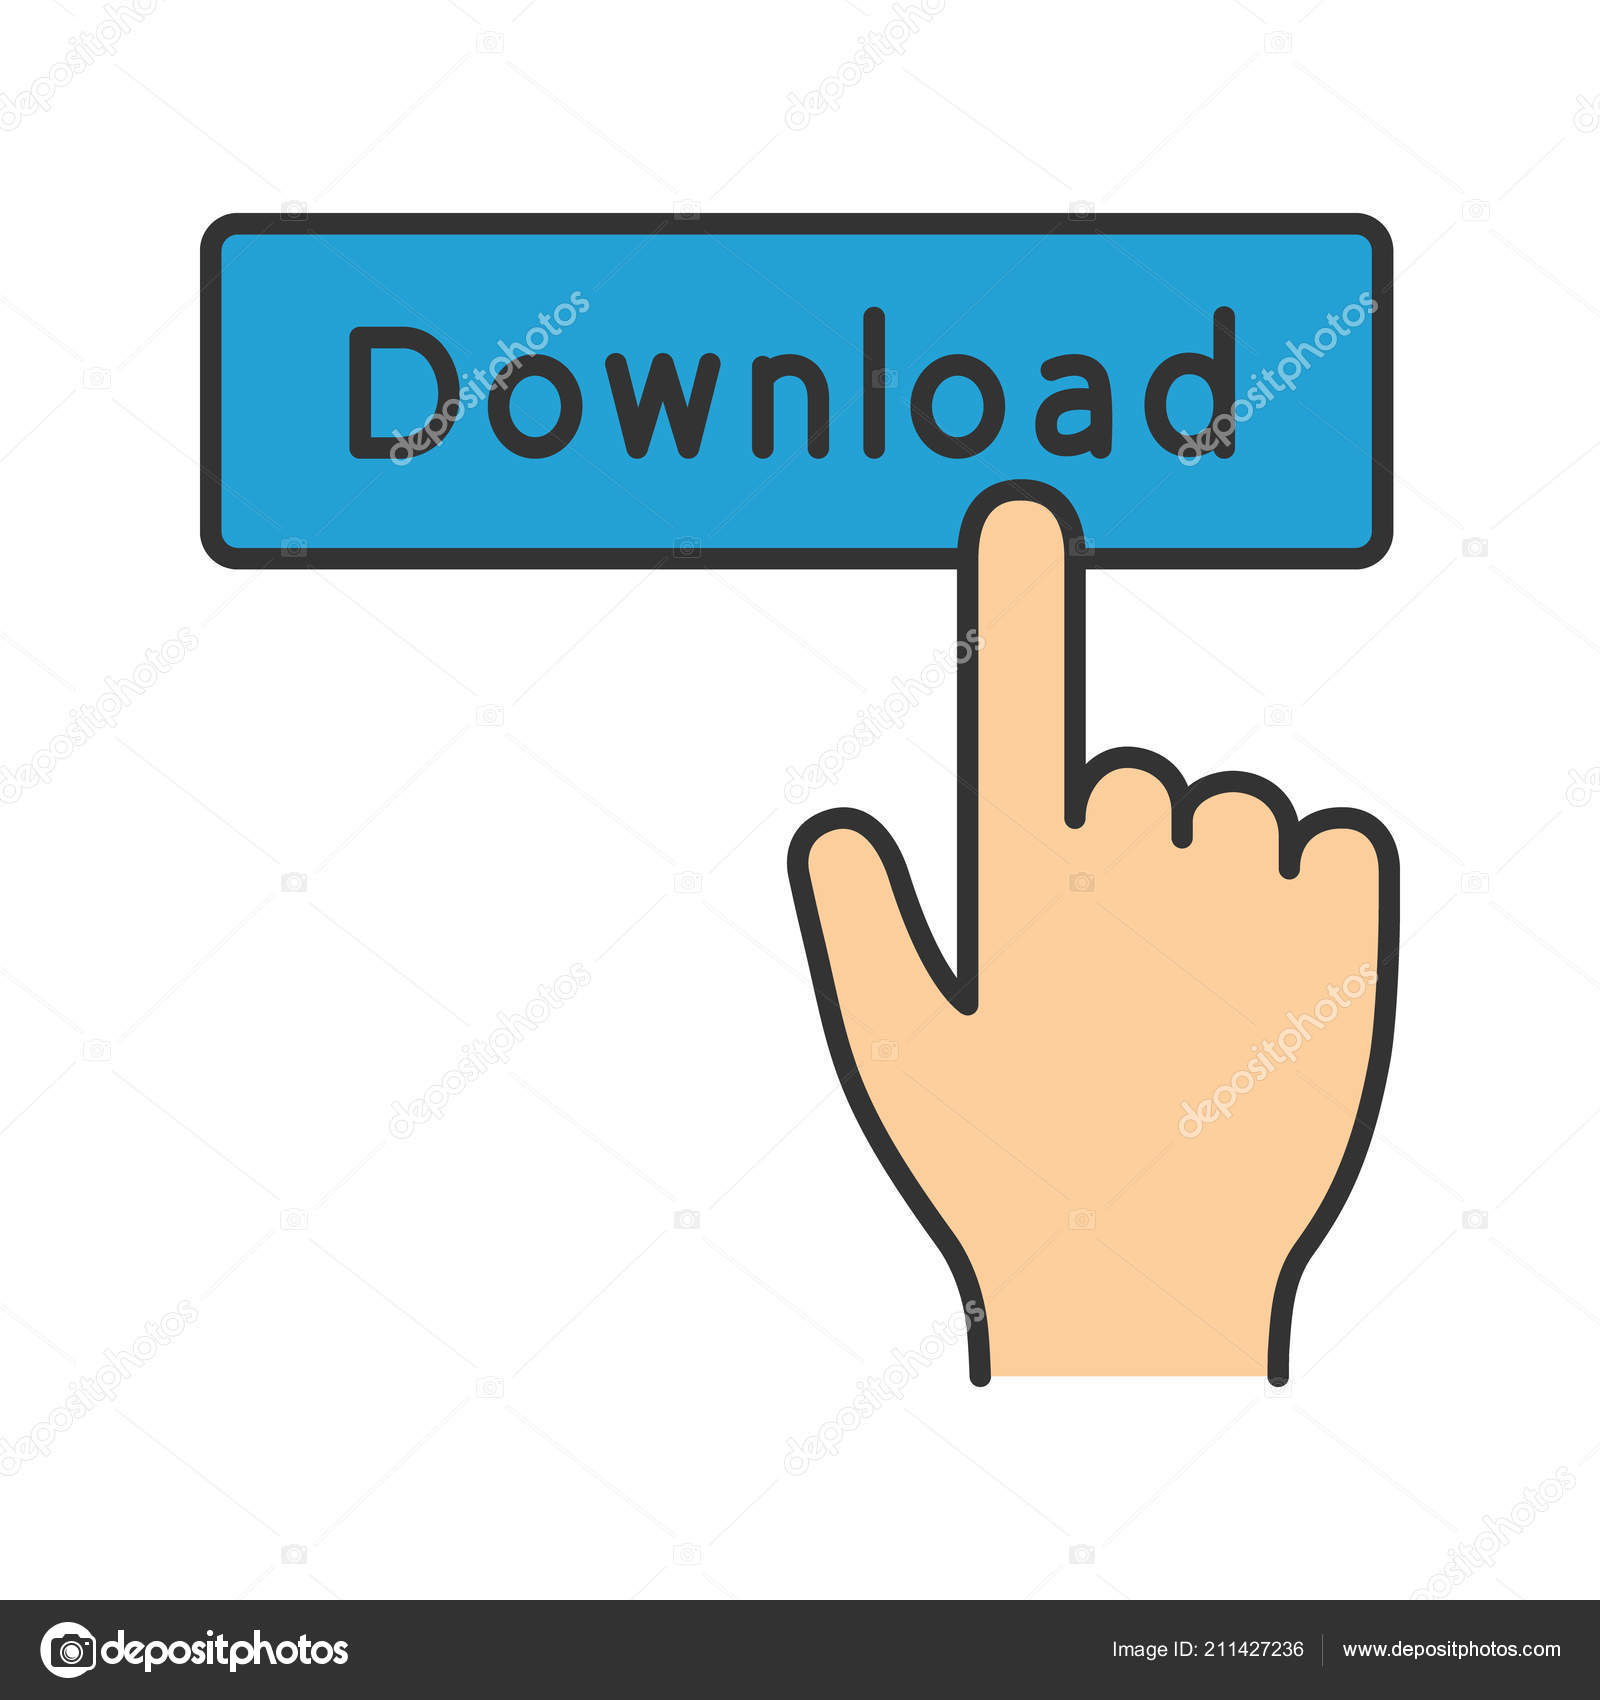 AutoCAD 2019 23.0 Crack   Free Download [Win/Mac]